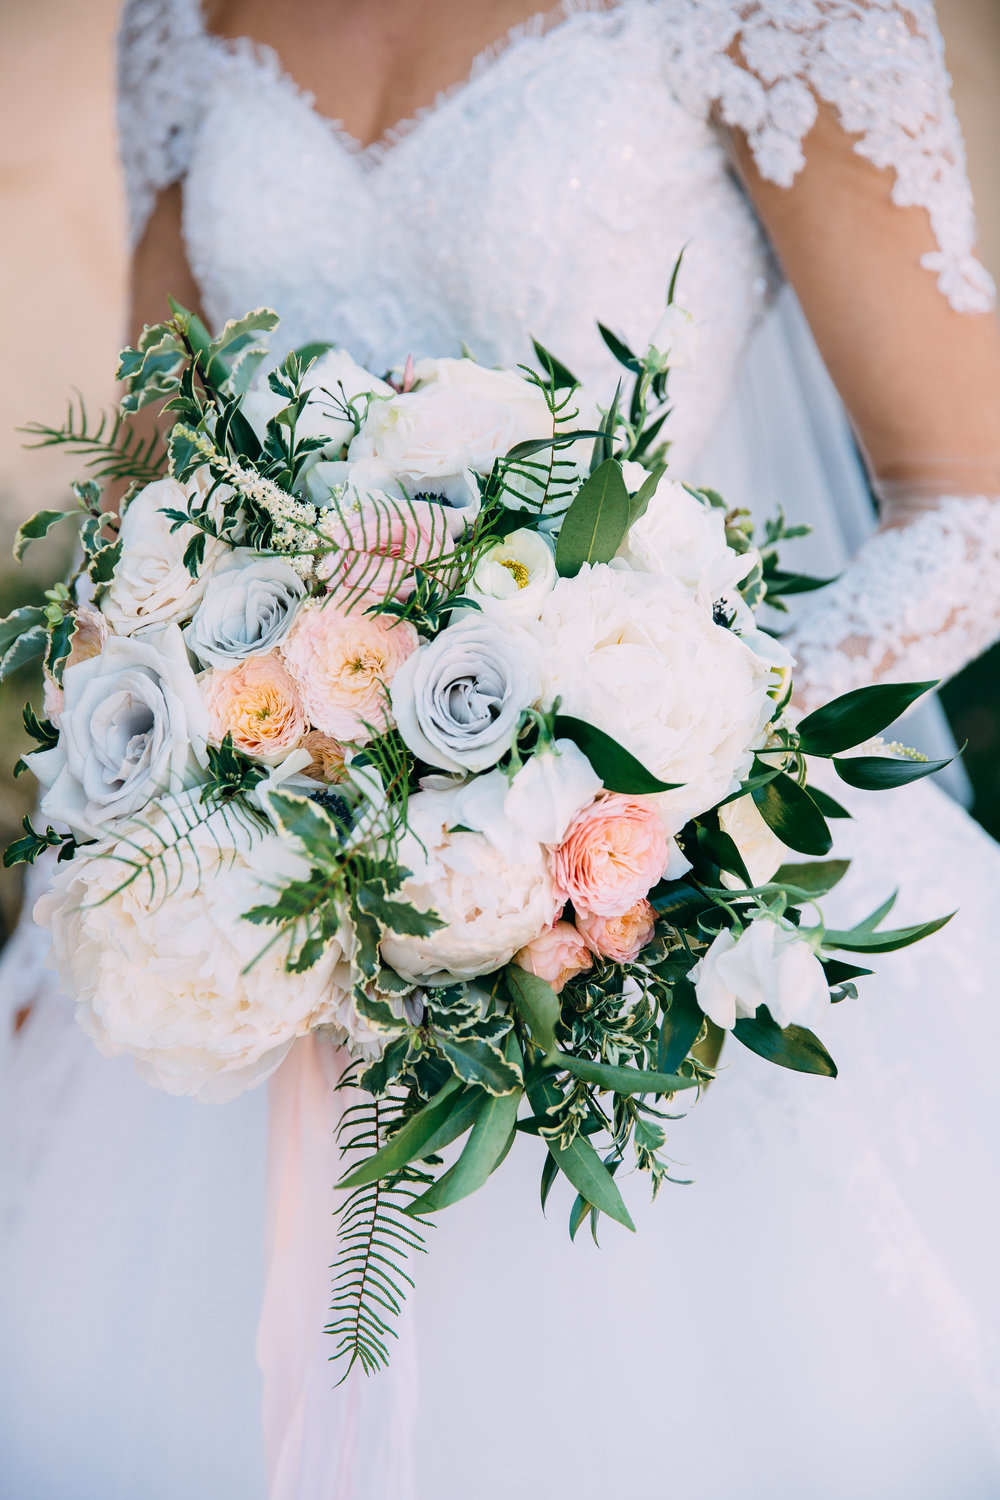 Violette-fleurs-anna-perevertaylo-White-Blush-elegant-flowers-for-wedding-decor-upscale-design-roseville-sacramento-california-rancho-robles-vinyards-lincoln-elegant-luxury-blush-whimsical-bridal-bouquet-beautiful-dress.jpg